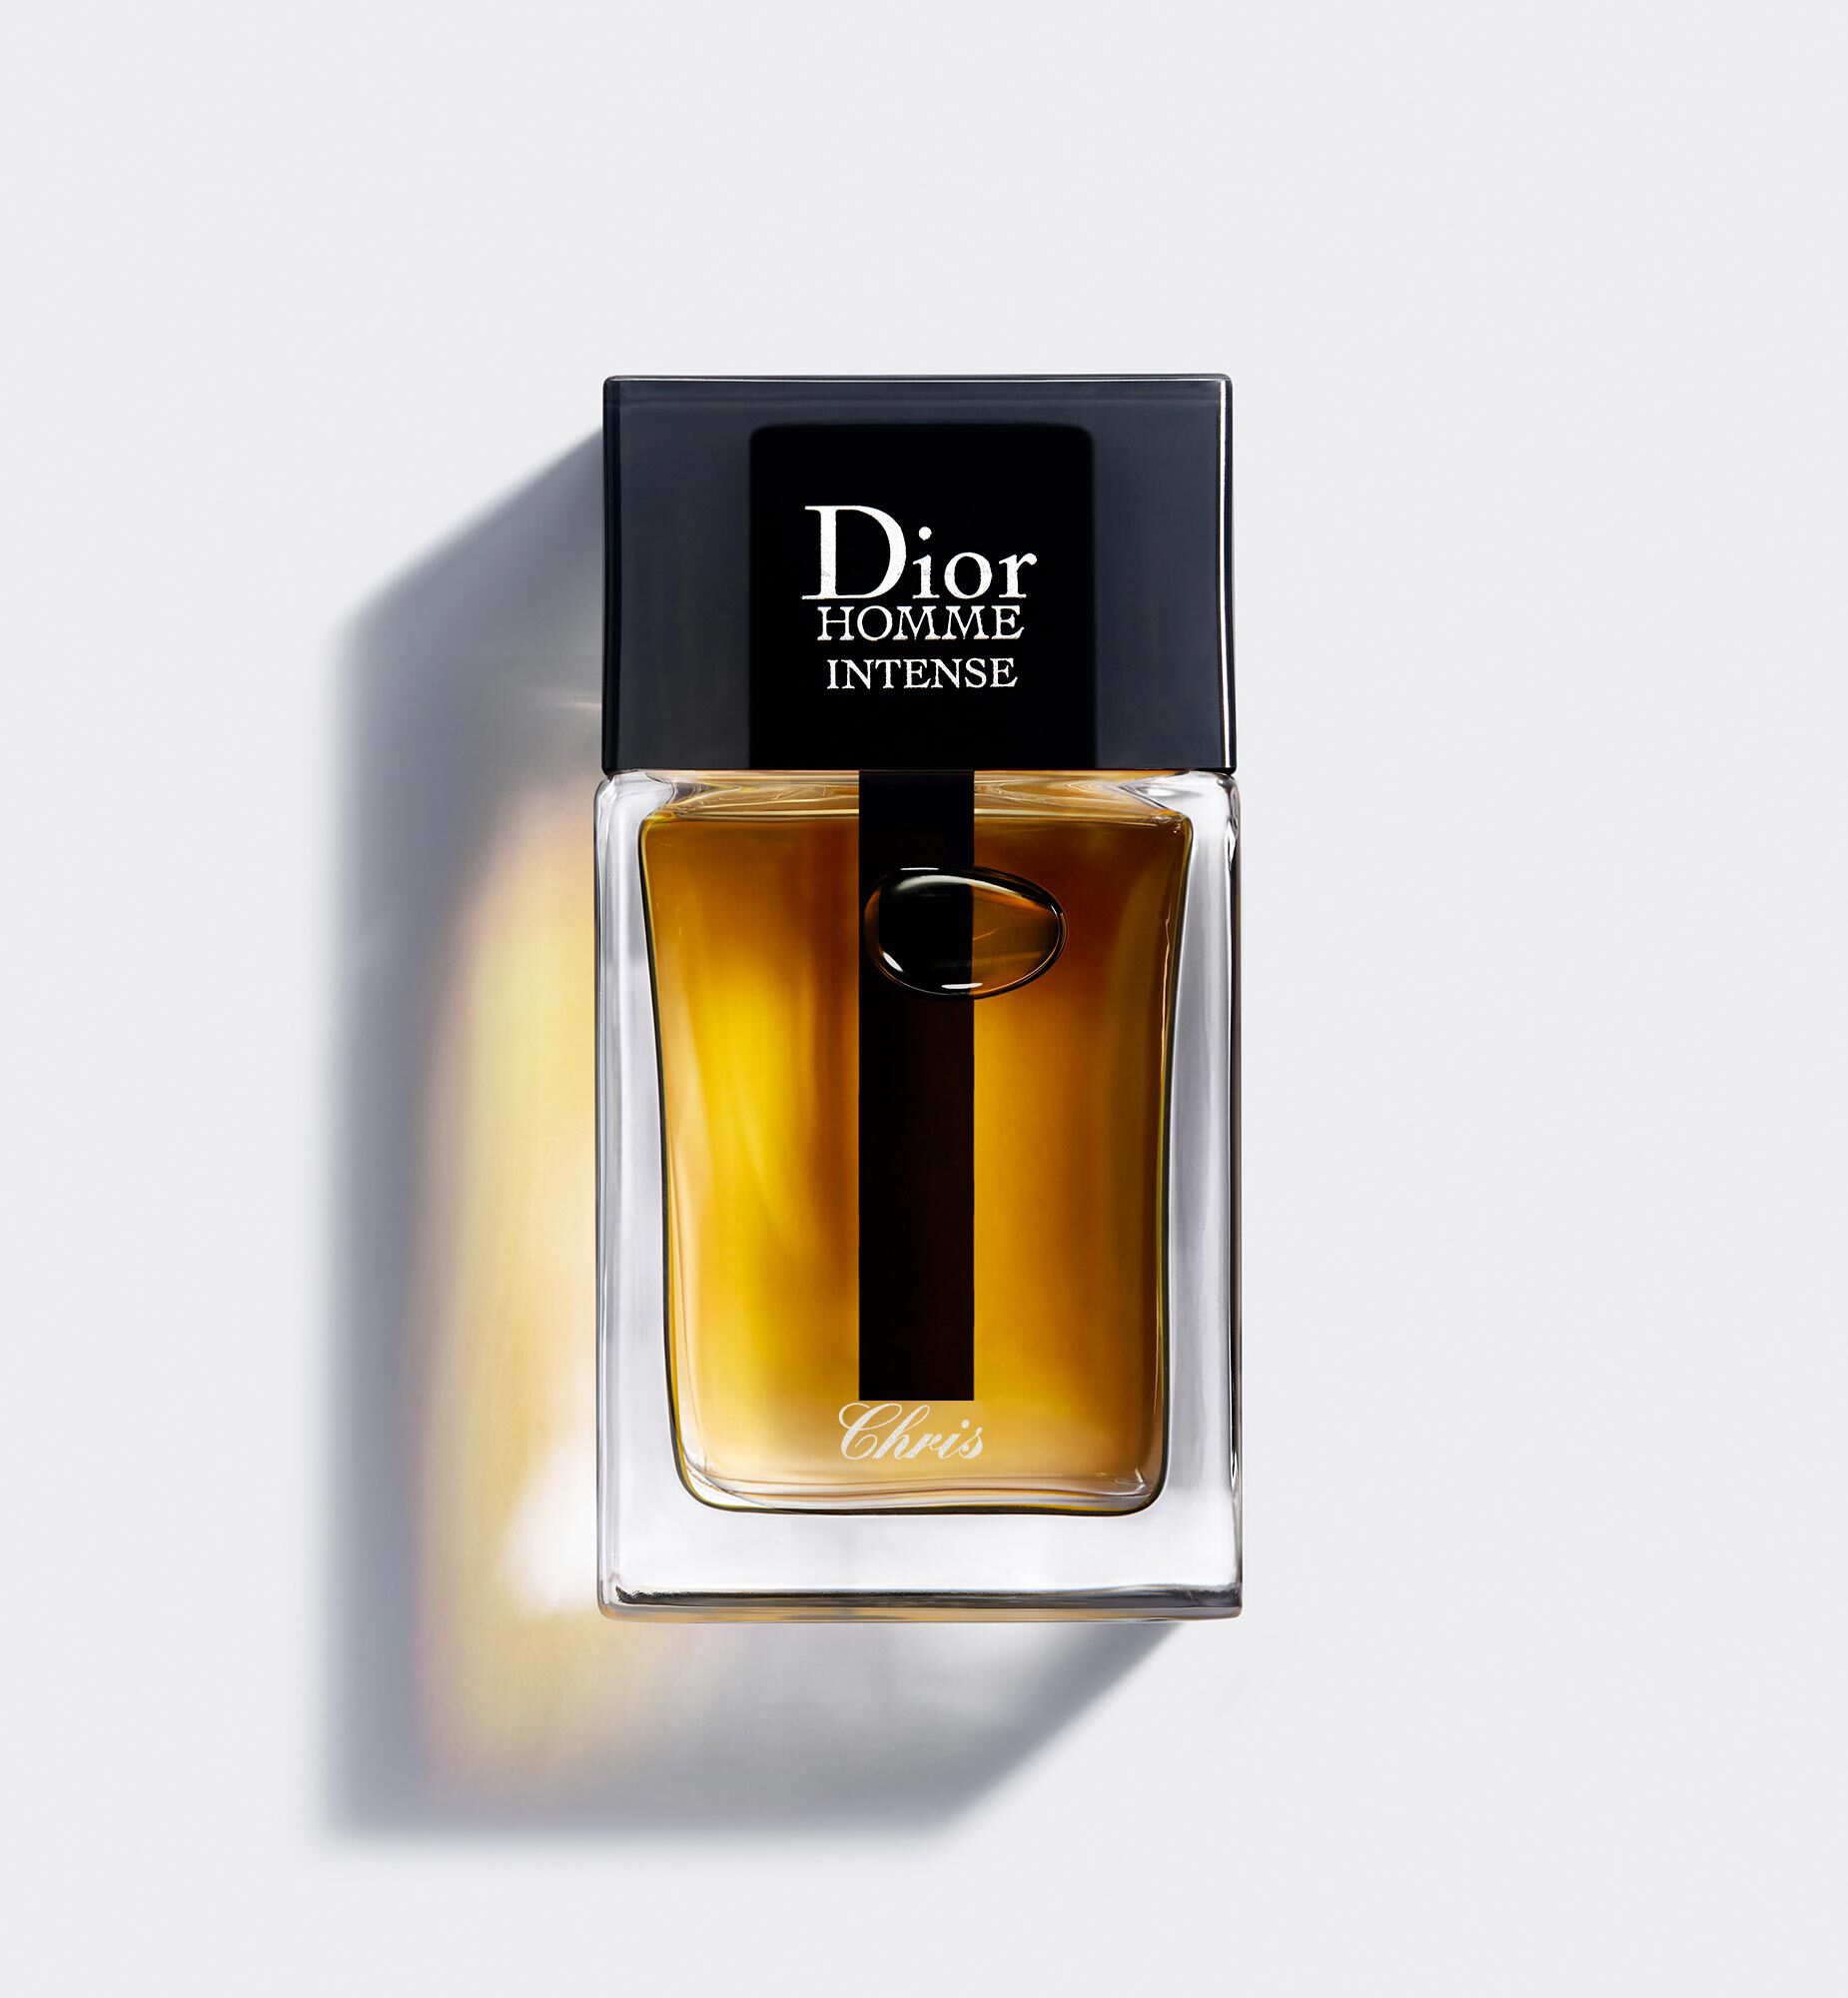 String string Fascineren Continent Dior Homme Intense: Eau de Parfum intens | DIOR